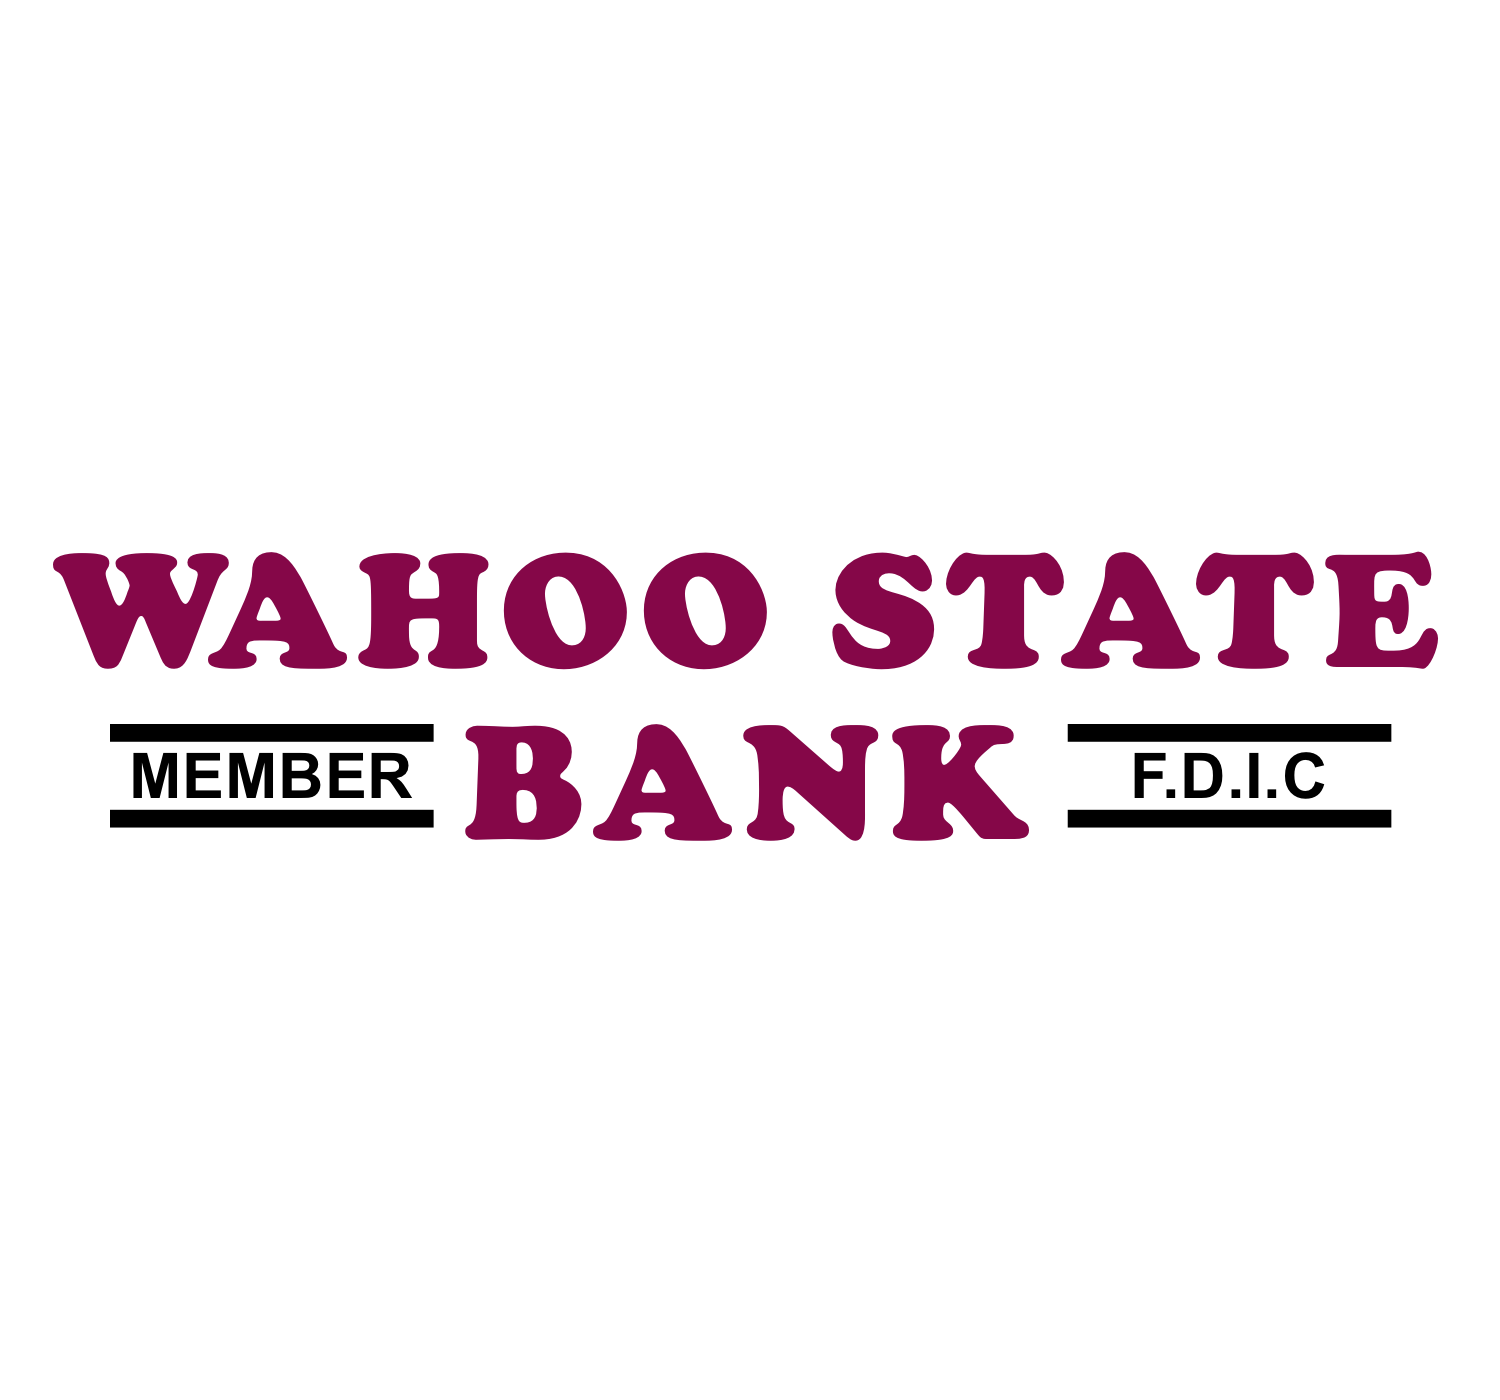 Wahoo State Bank